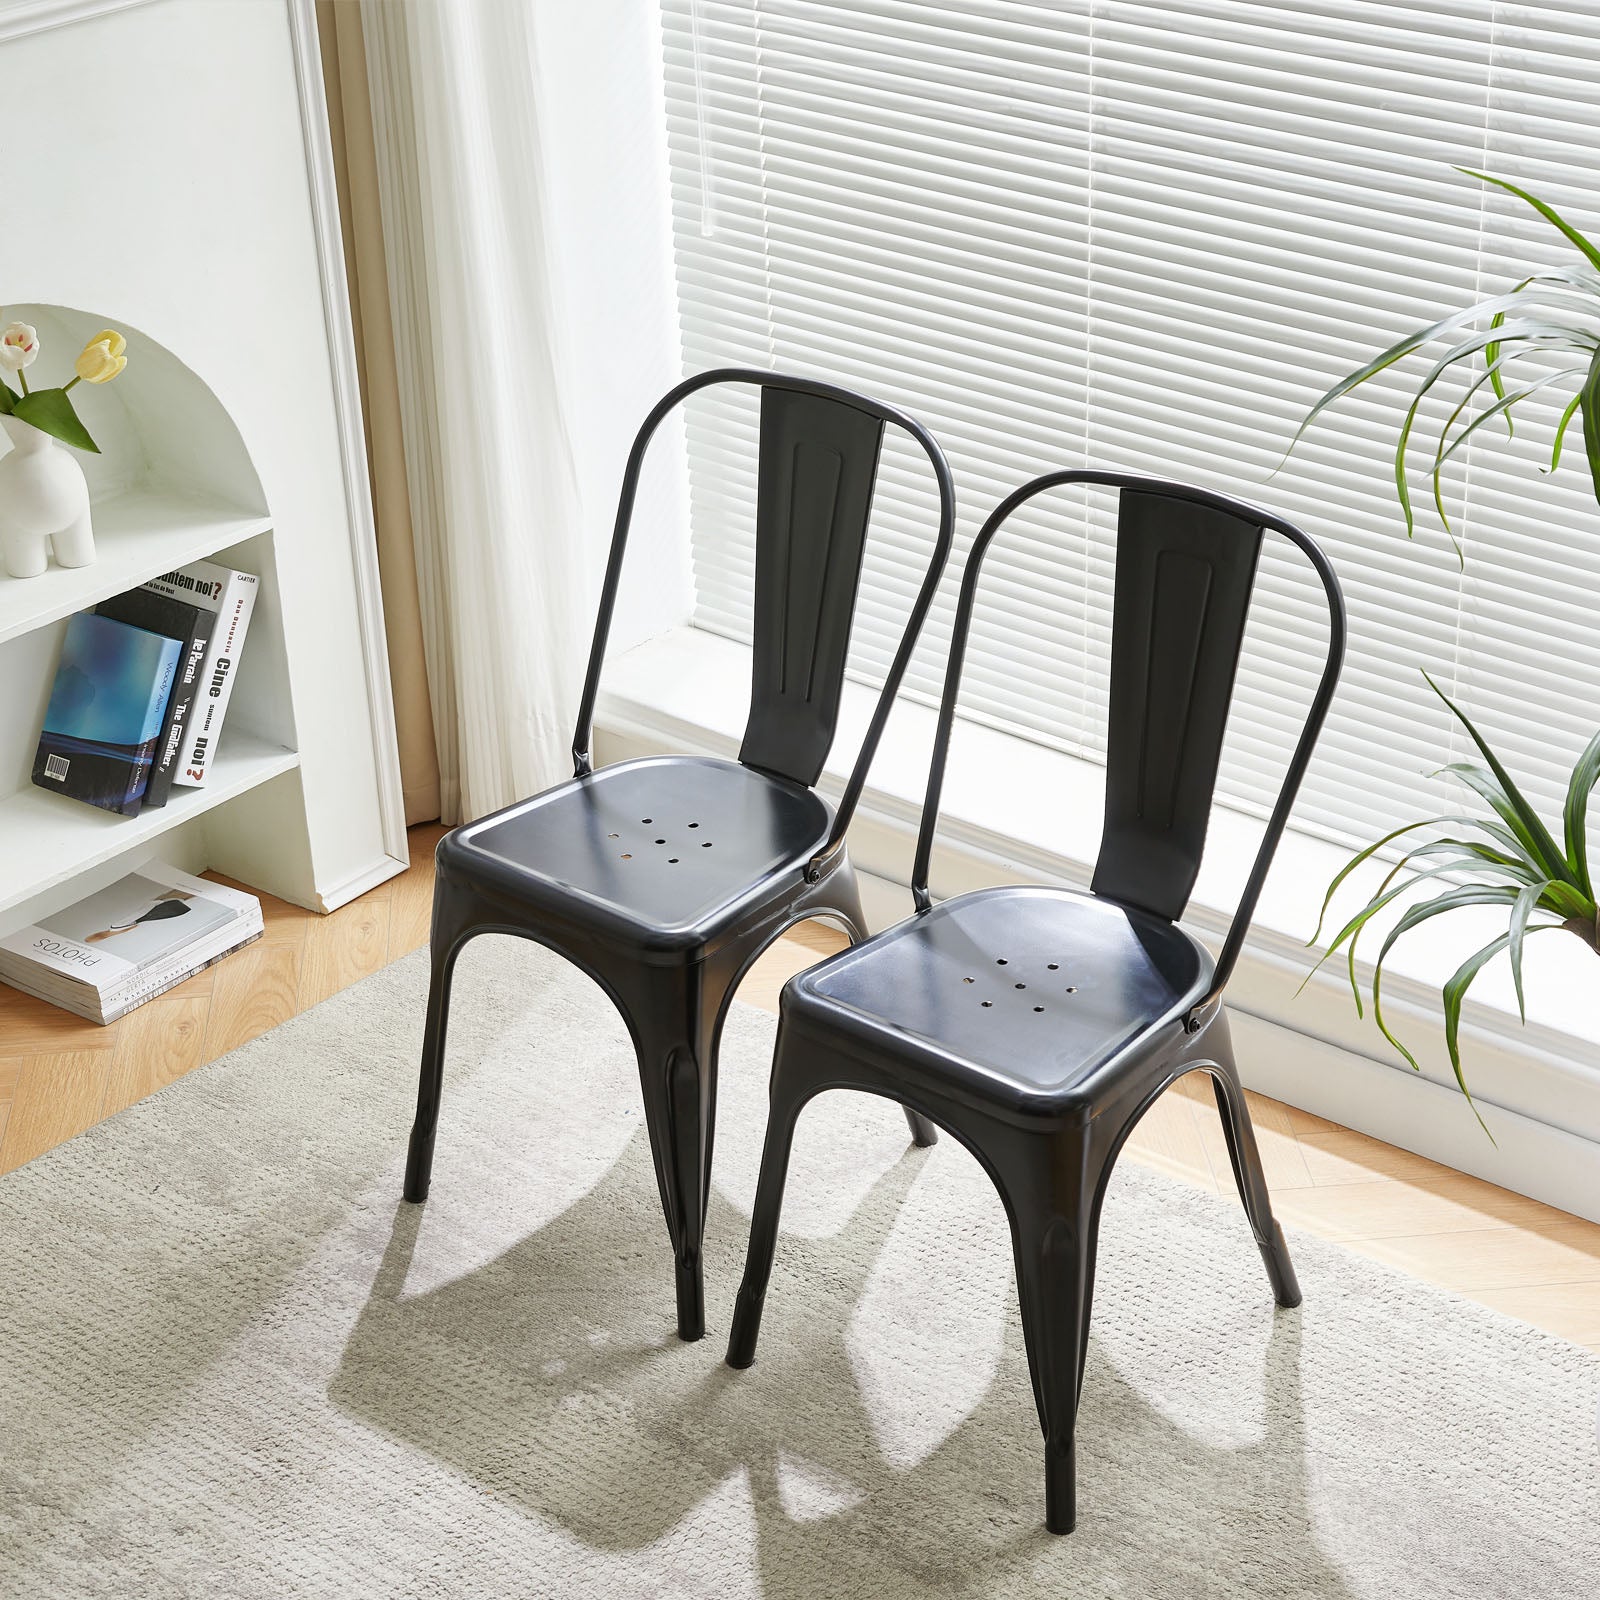 MOOLI Bar Stool Sheet Metal Chairs with Steel Legs - Black